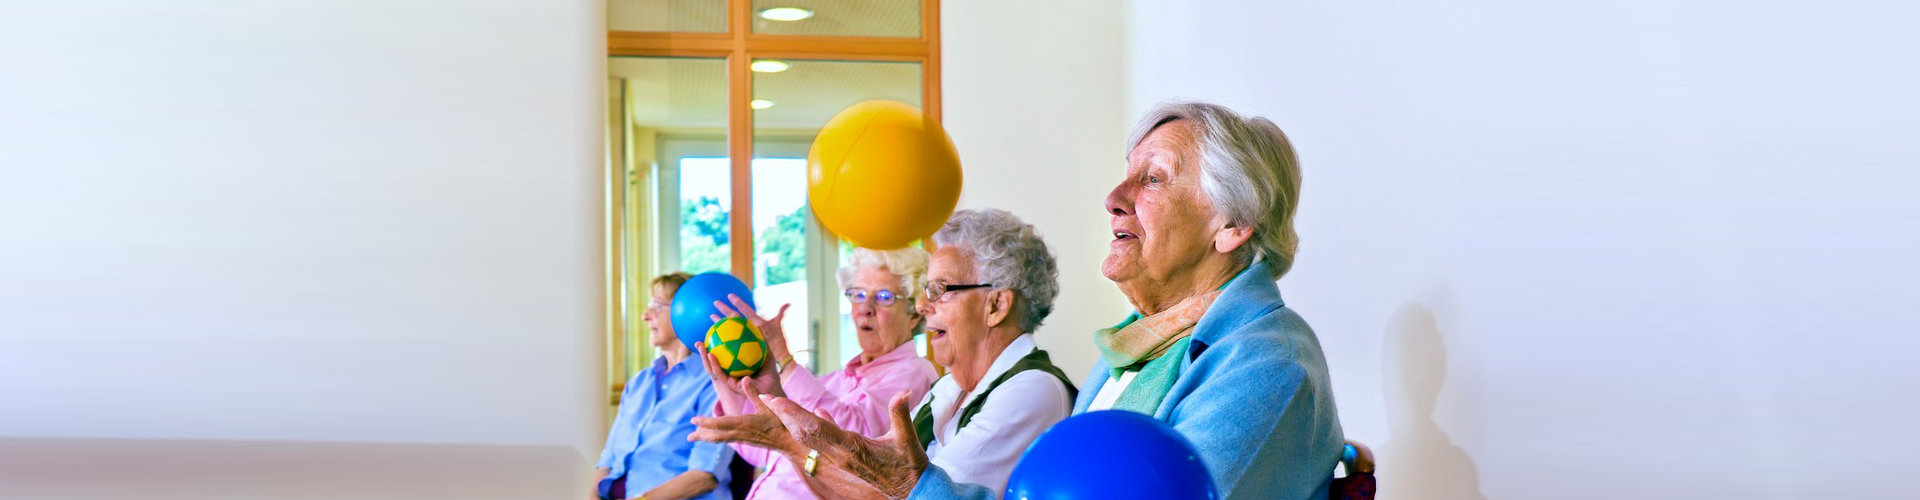 group of senior women playing ball